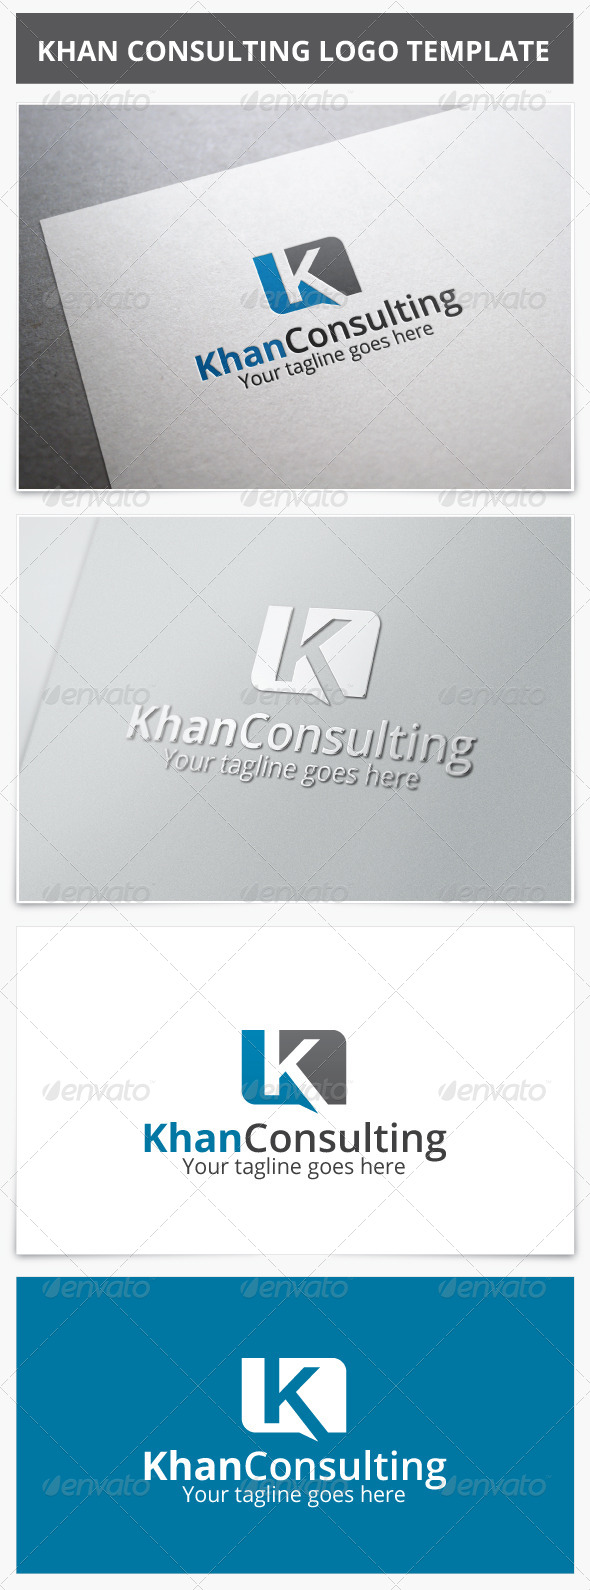 Khan Consulting Logo